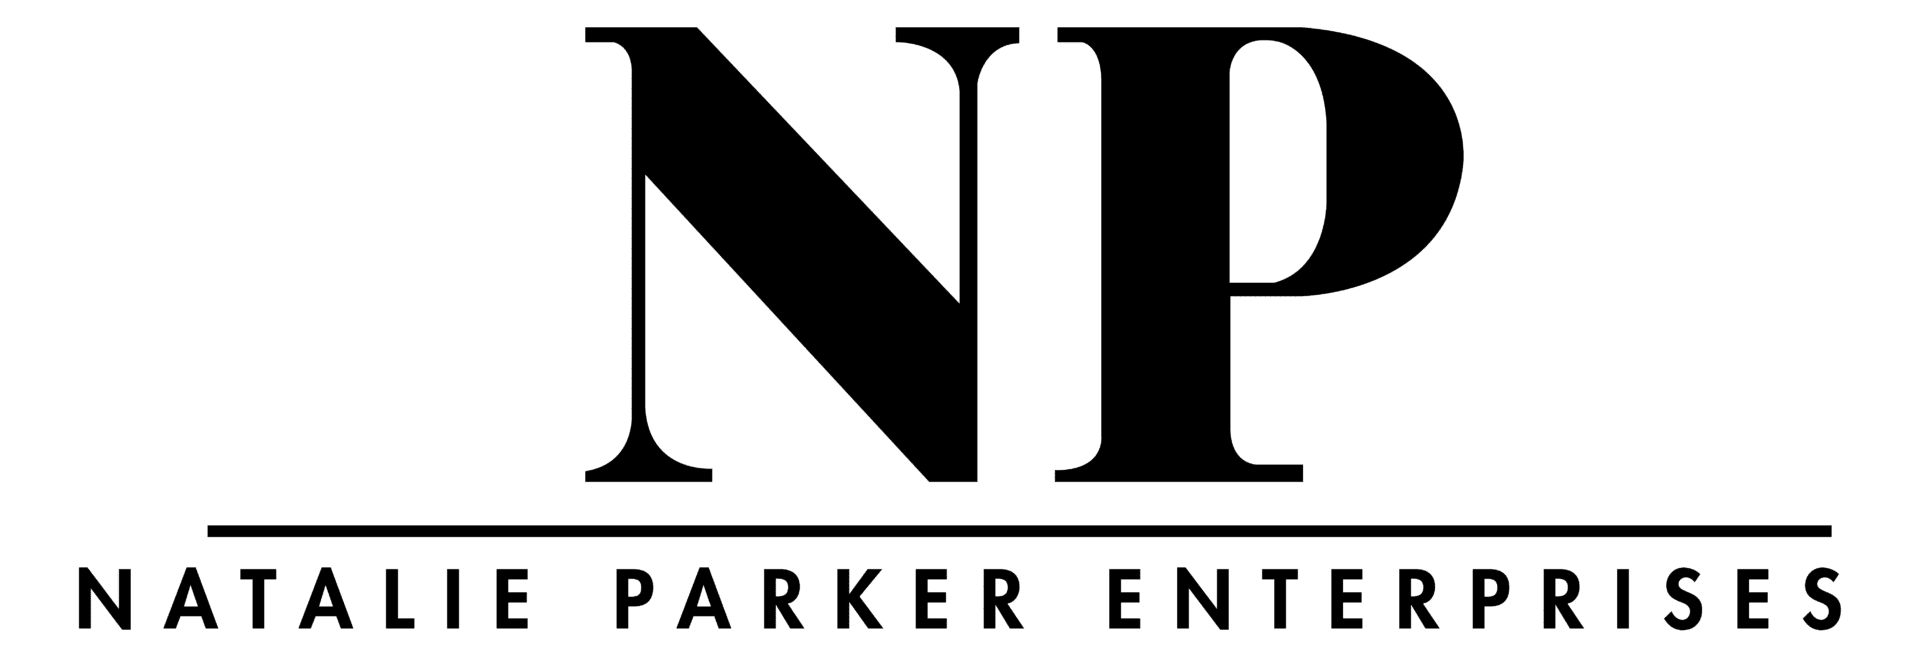 NPE-Main-logo